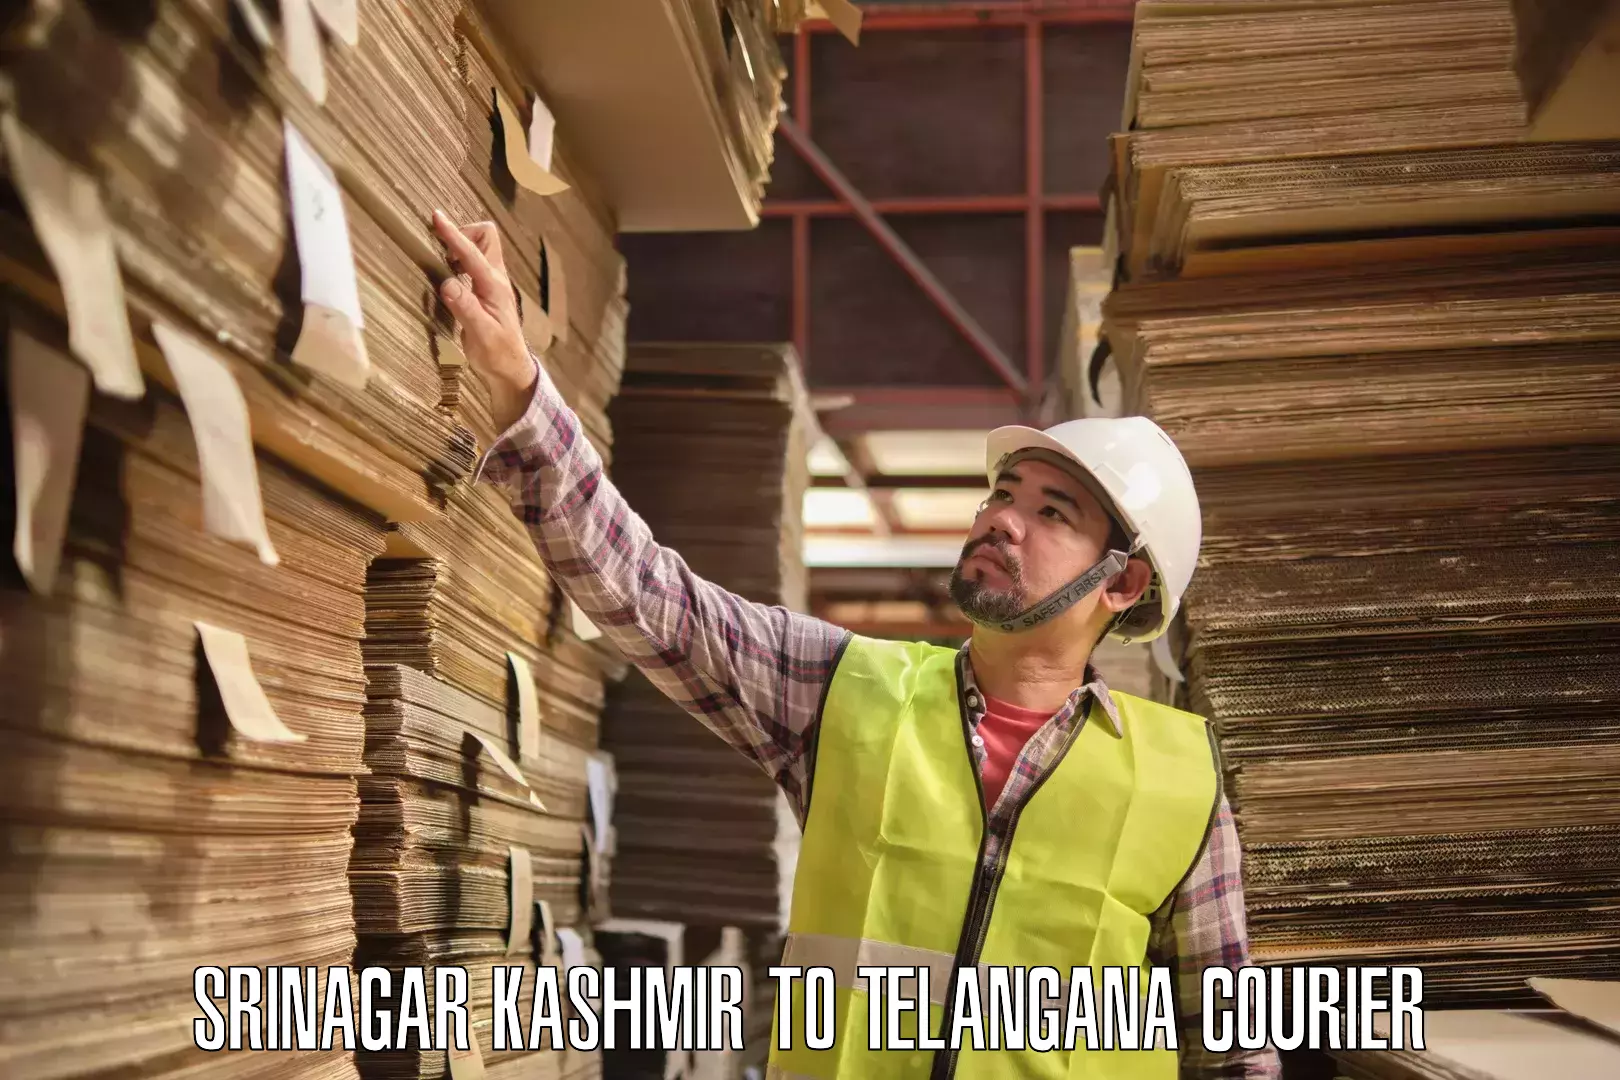 Digital courier platforms Srinagar Kashmir to Nalgonda